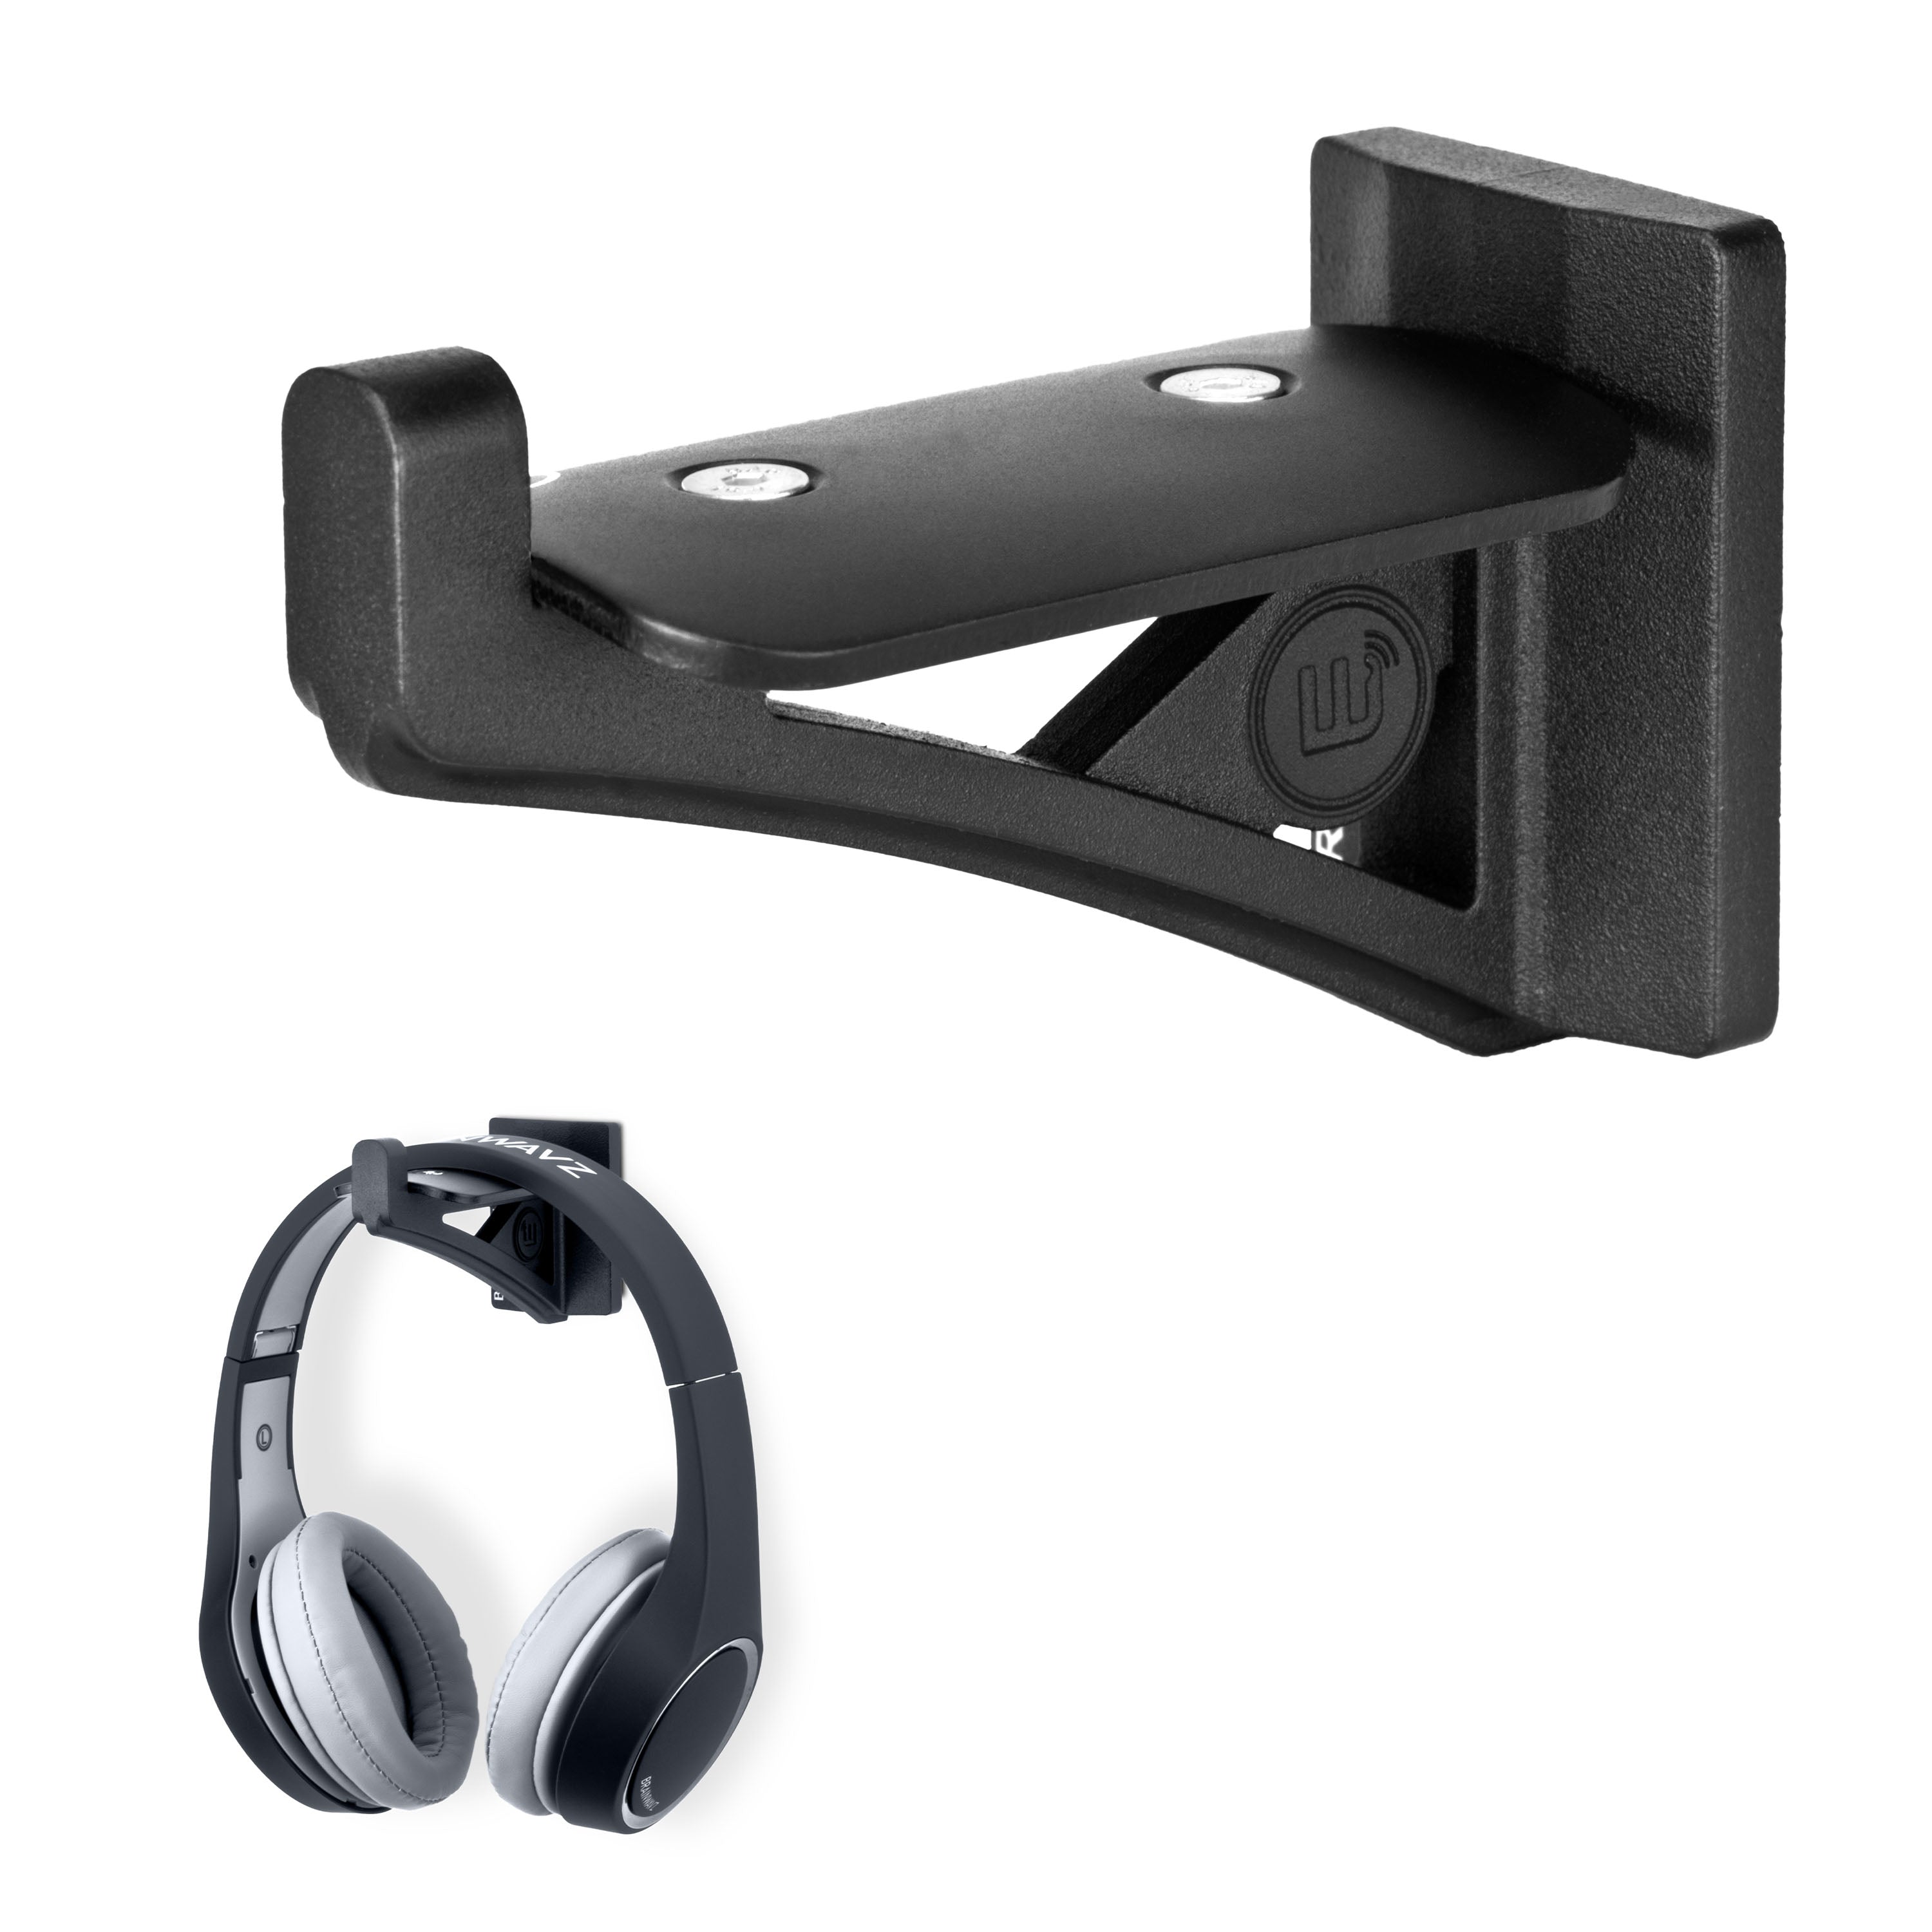 The Hooka - All Metal Headphone Stand Headset Hanger - Brainwavz Audio